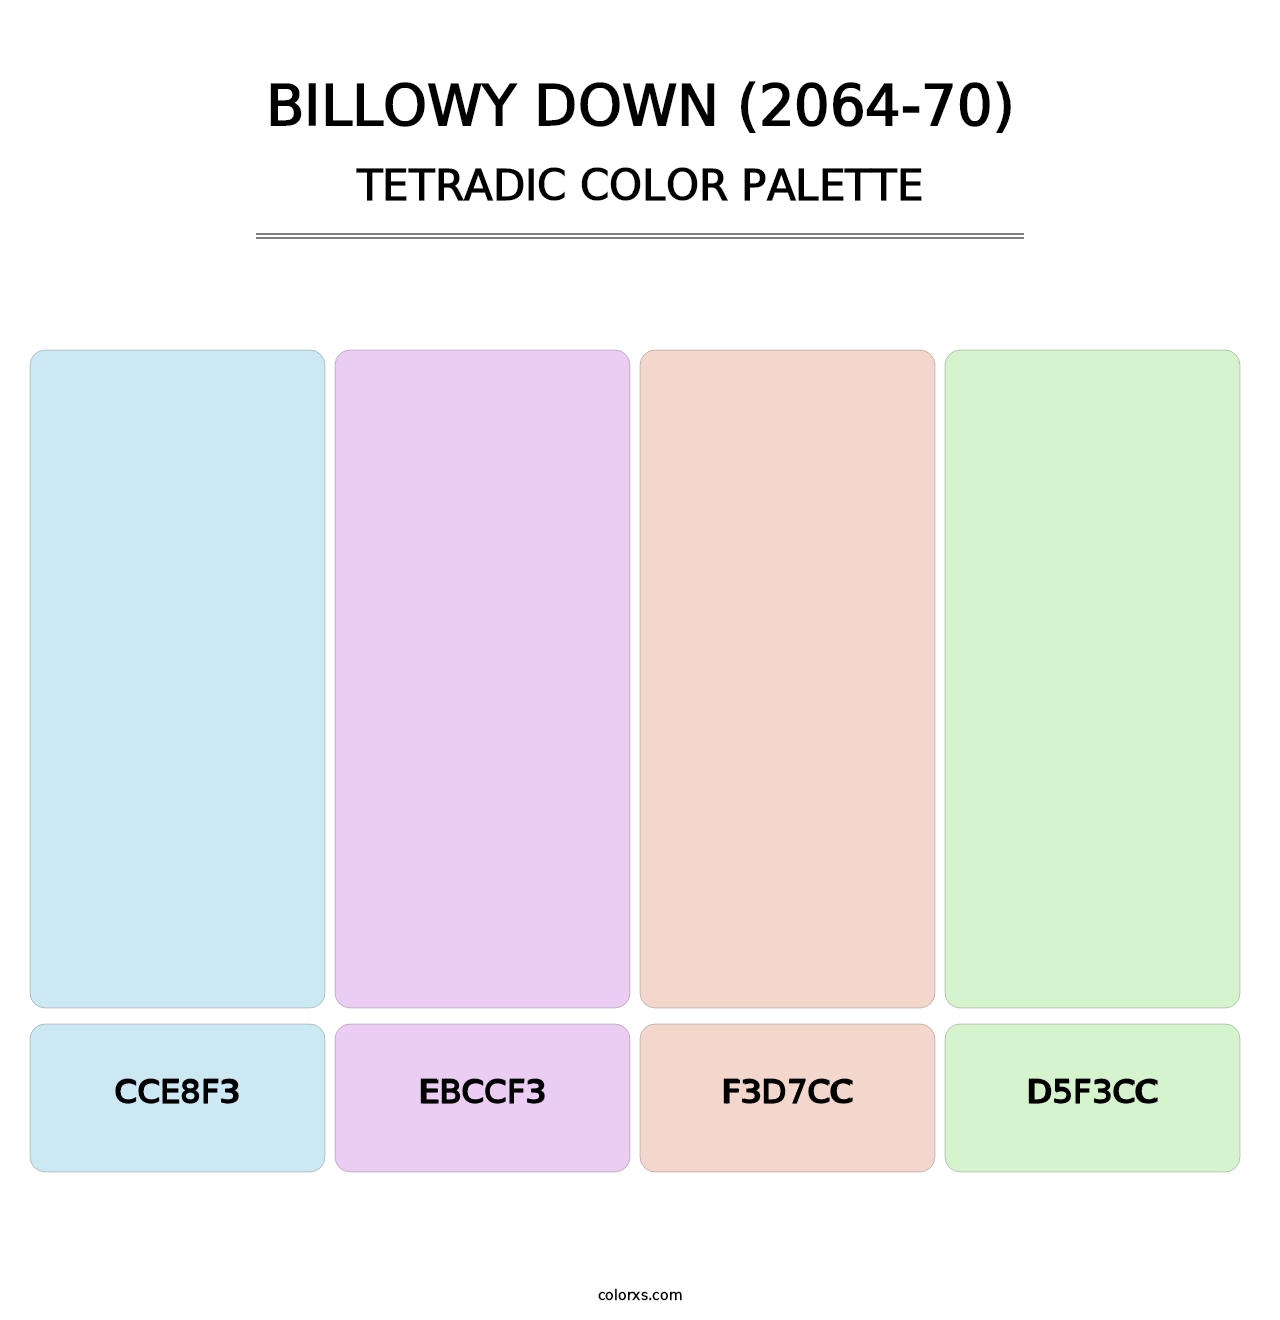 Billowy Down (2064-70) - Tetradic Color Palette